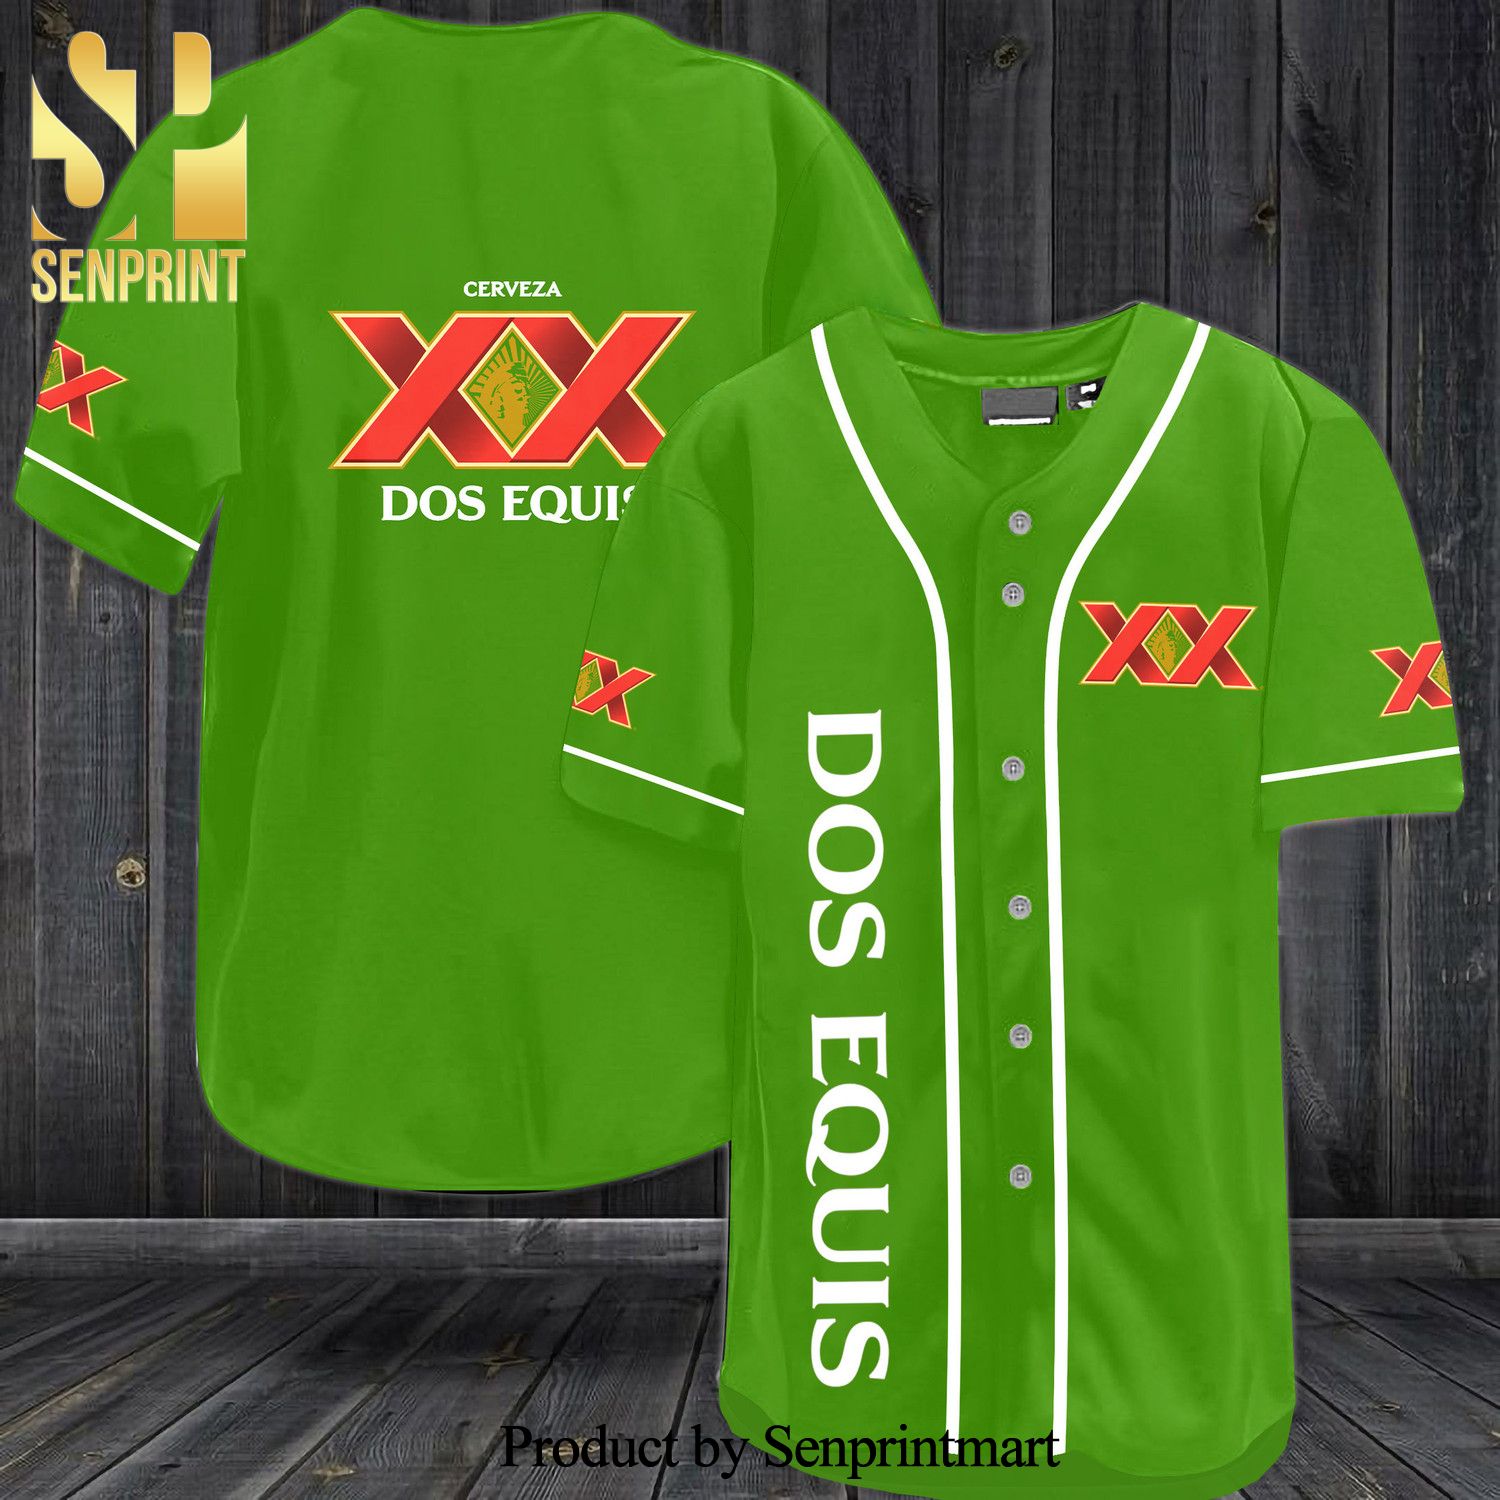 Dos Equis XX All Over Print Baseball Jersey – Green